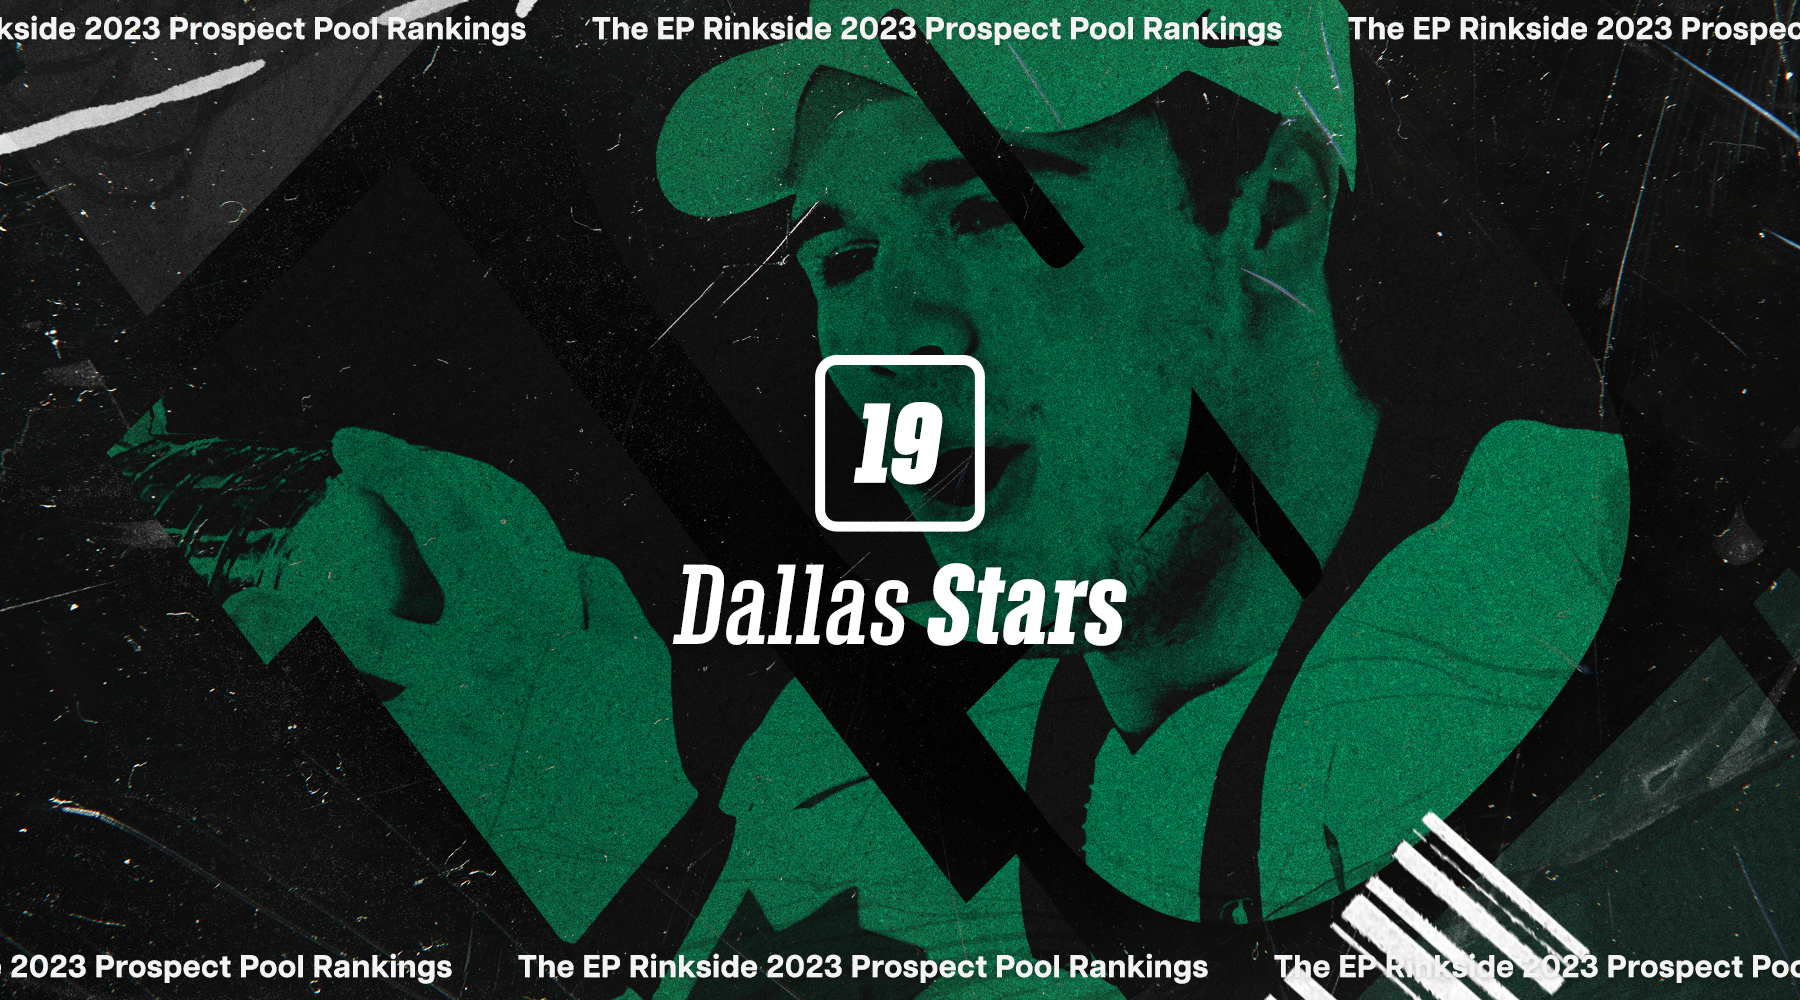 EP Rinkside 2023 Prospect Pool Rankings: No. 19-ranked Dallas Stars